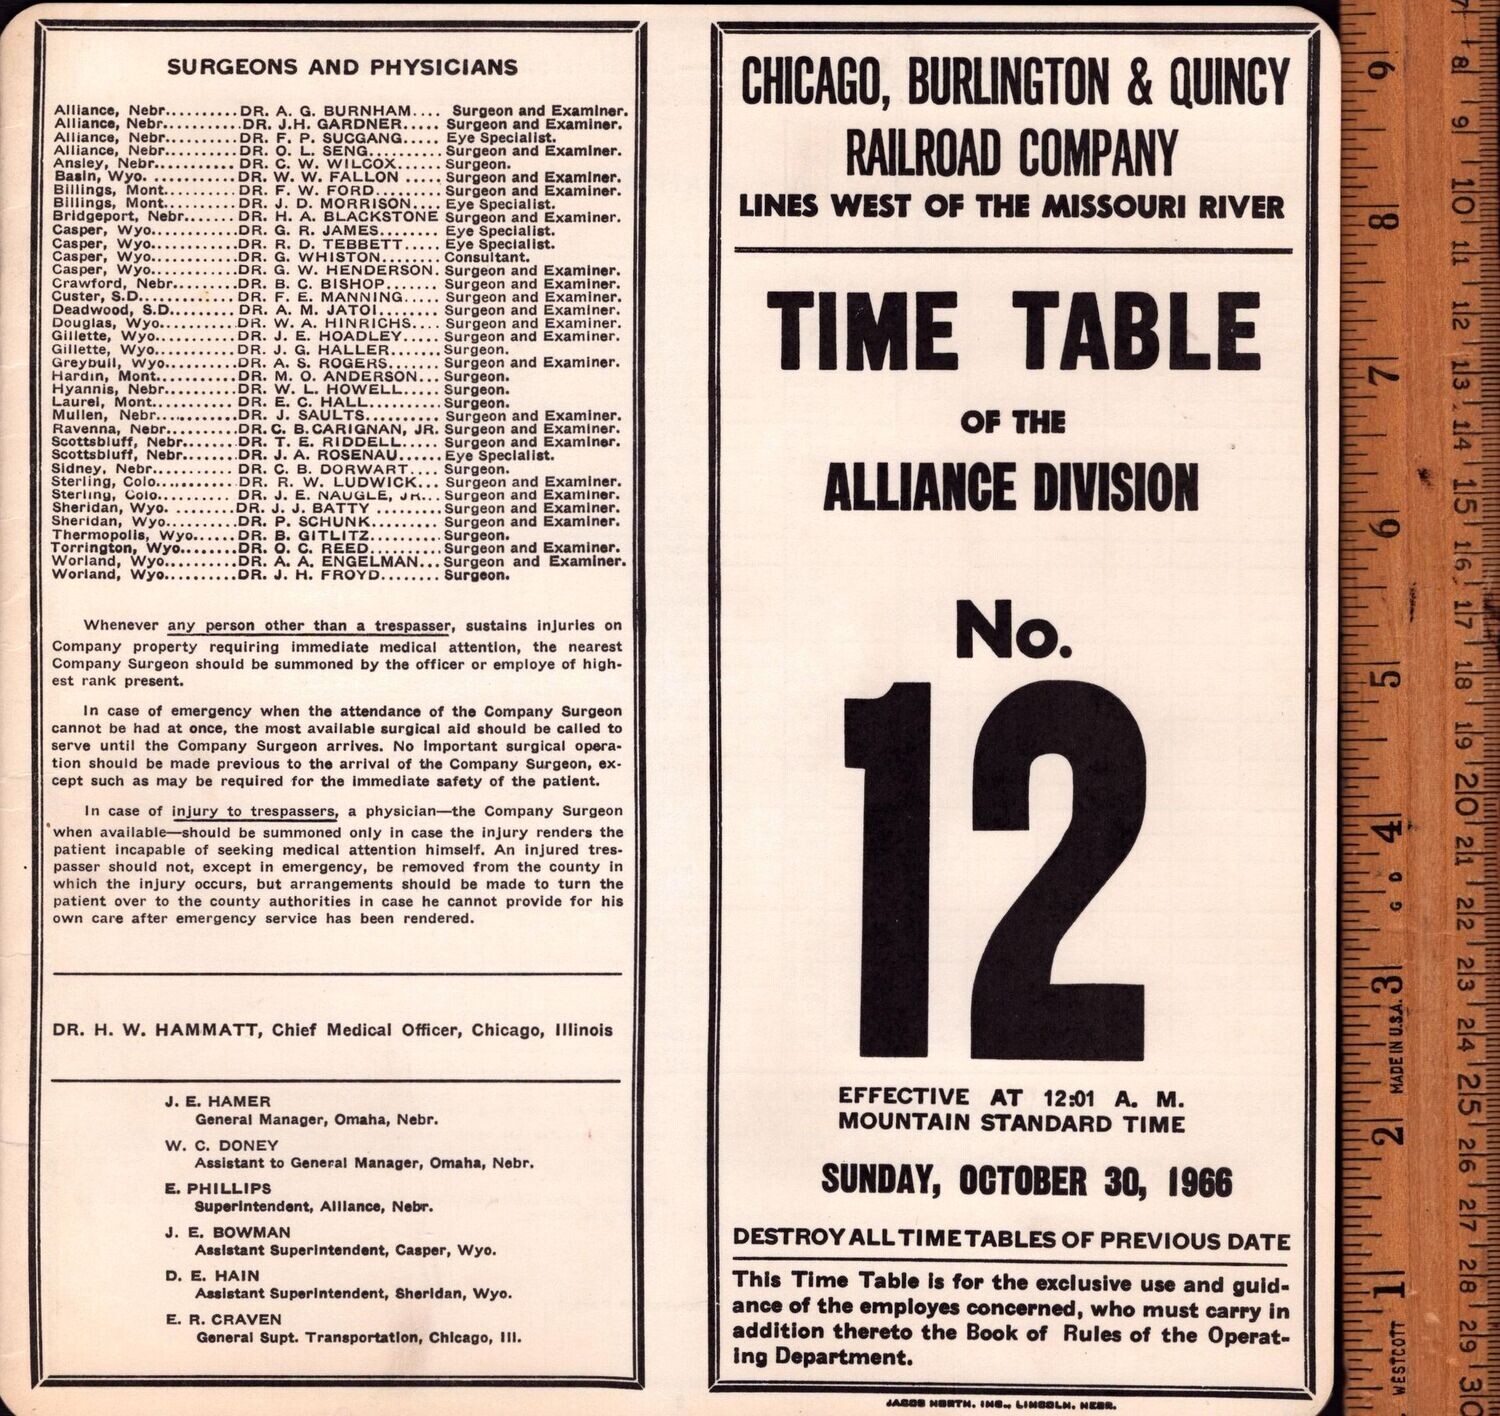 Chicago, Burlington & Quincy Alliance Division 1966